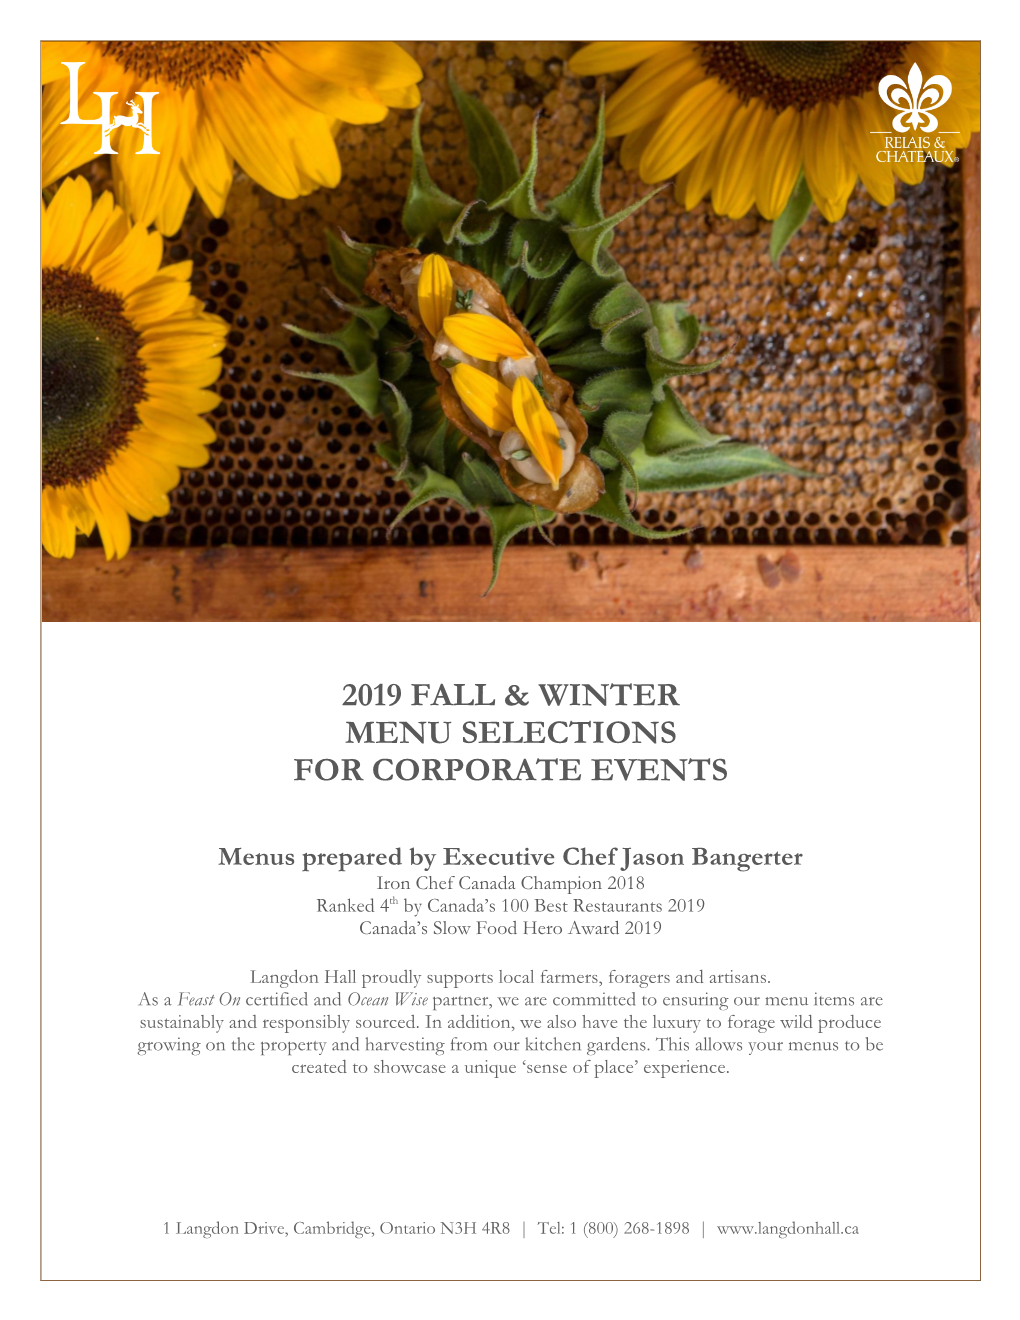 2019 Fall & Winter Menu Selections for Corporate